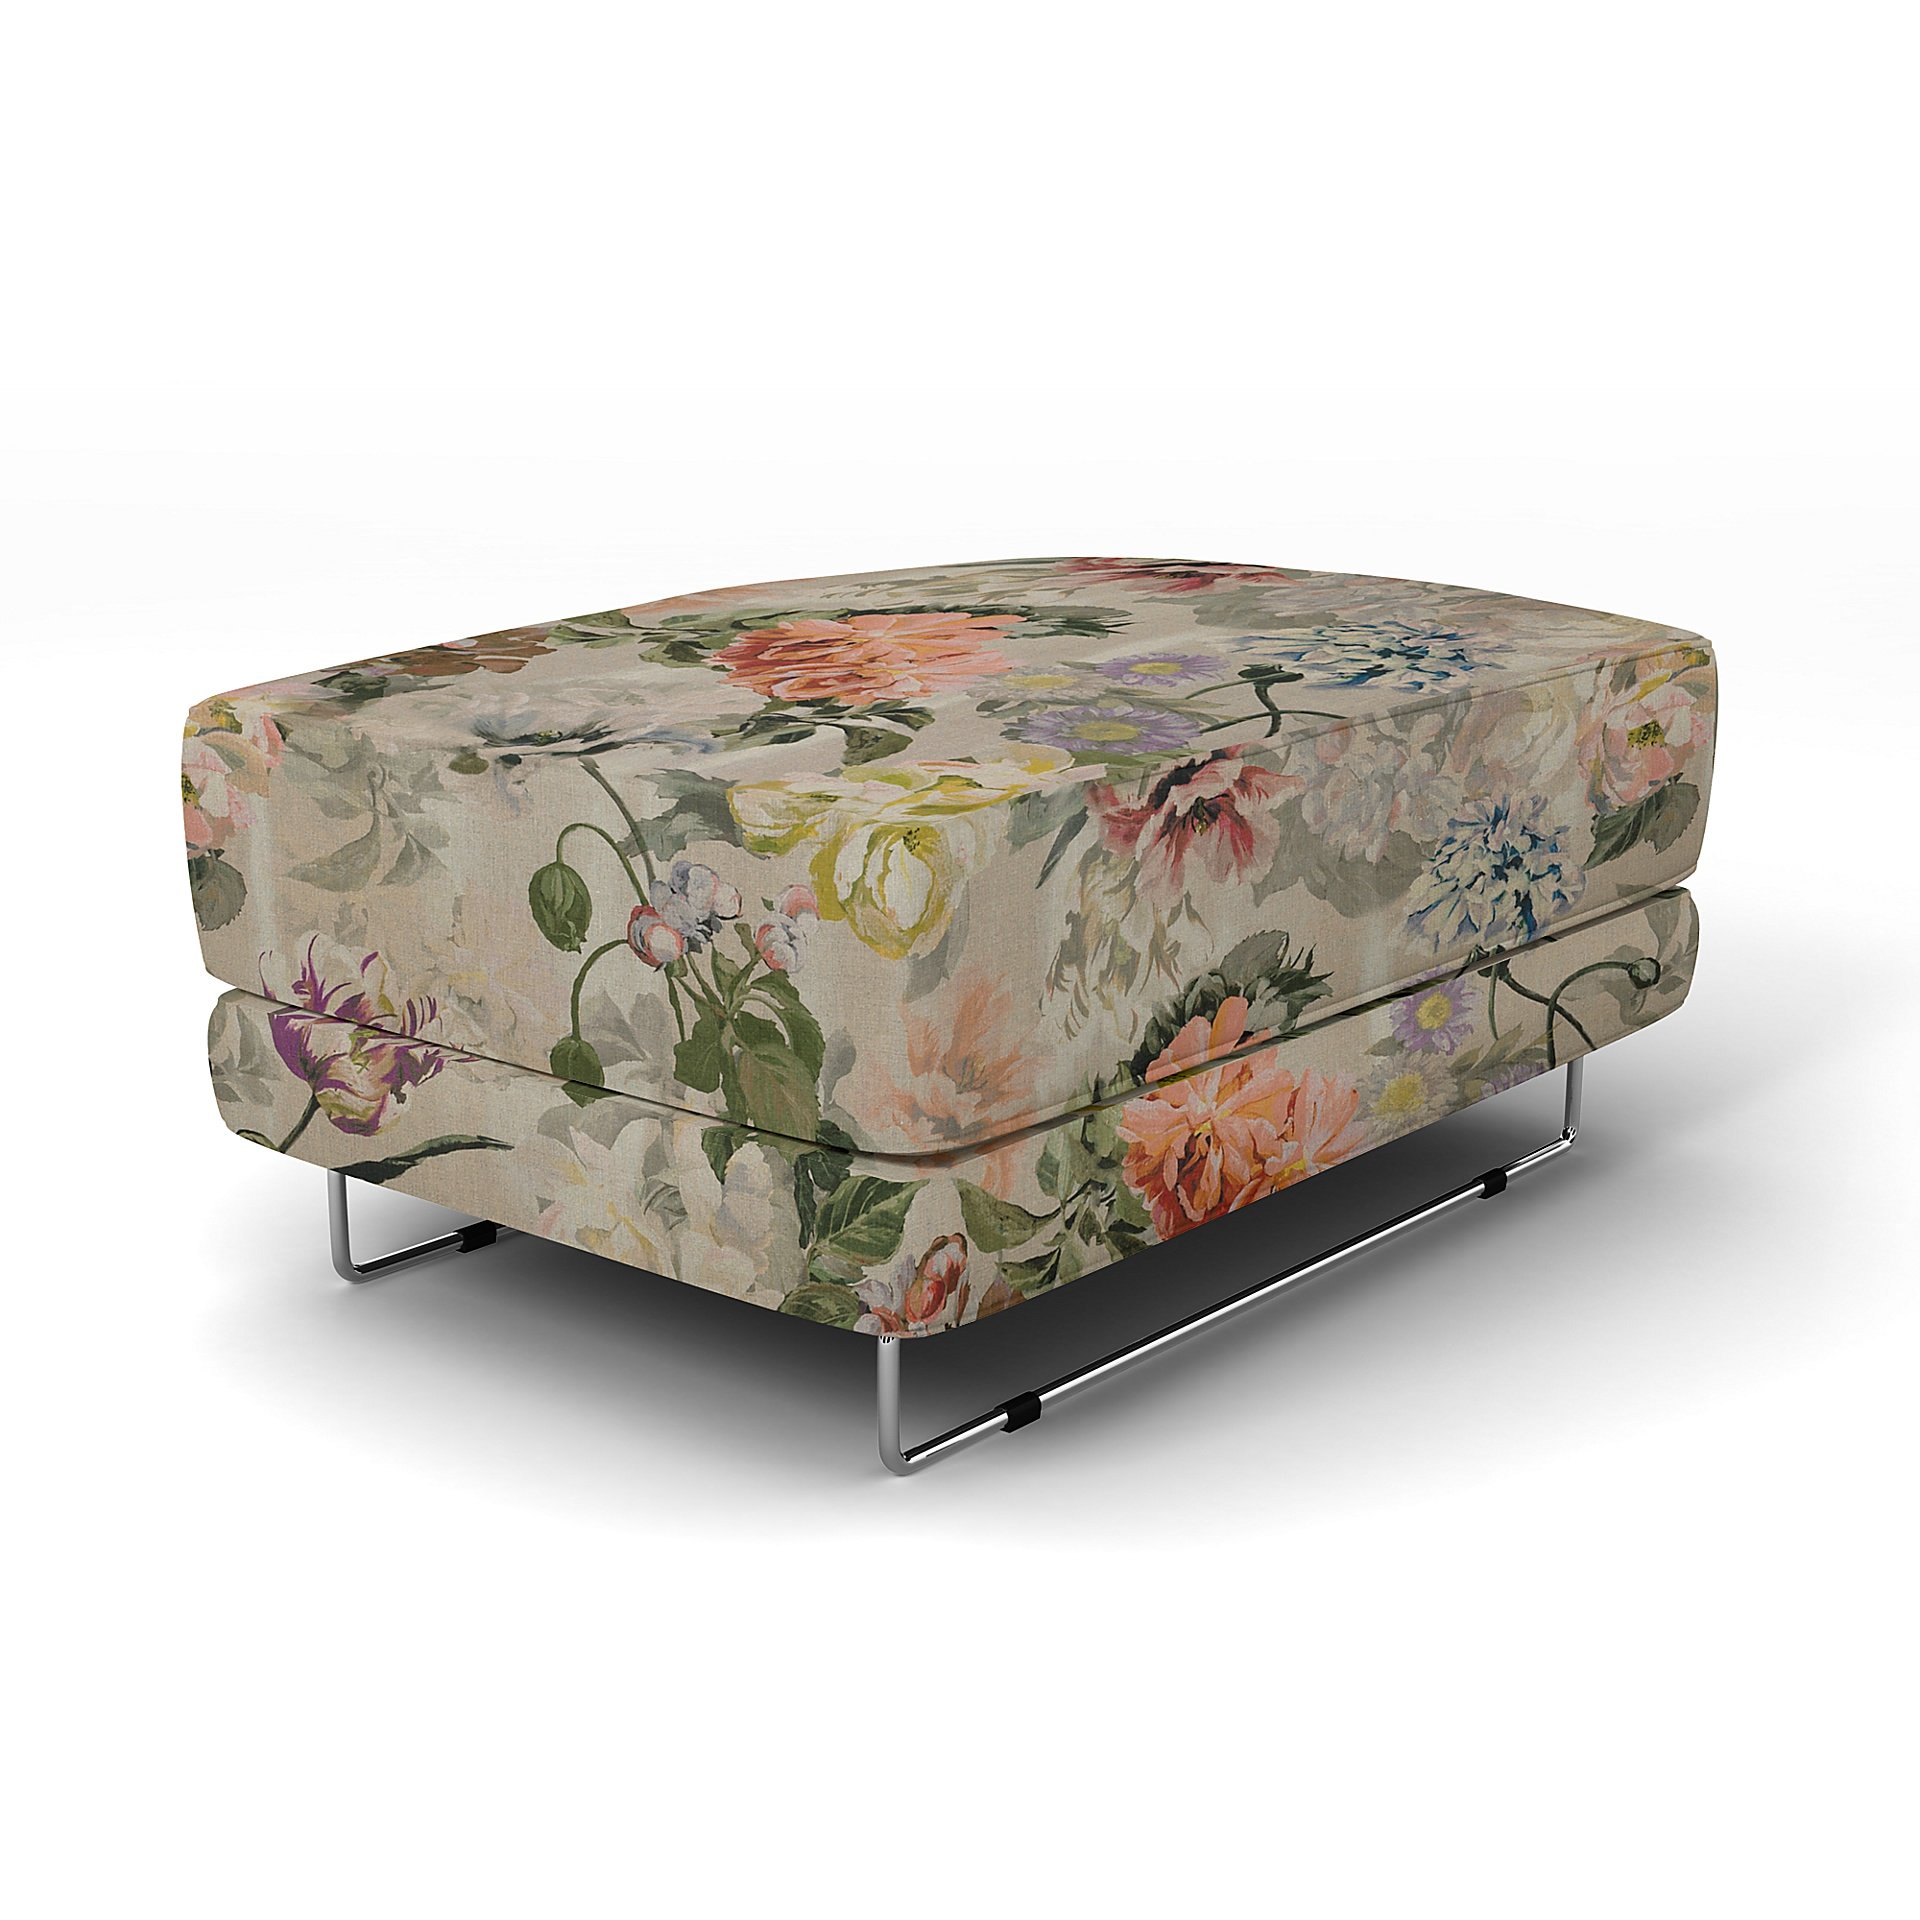 IKEA - Tylosand Footstool Cover, Delft Flower - Tuberose, Linen - Bemz